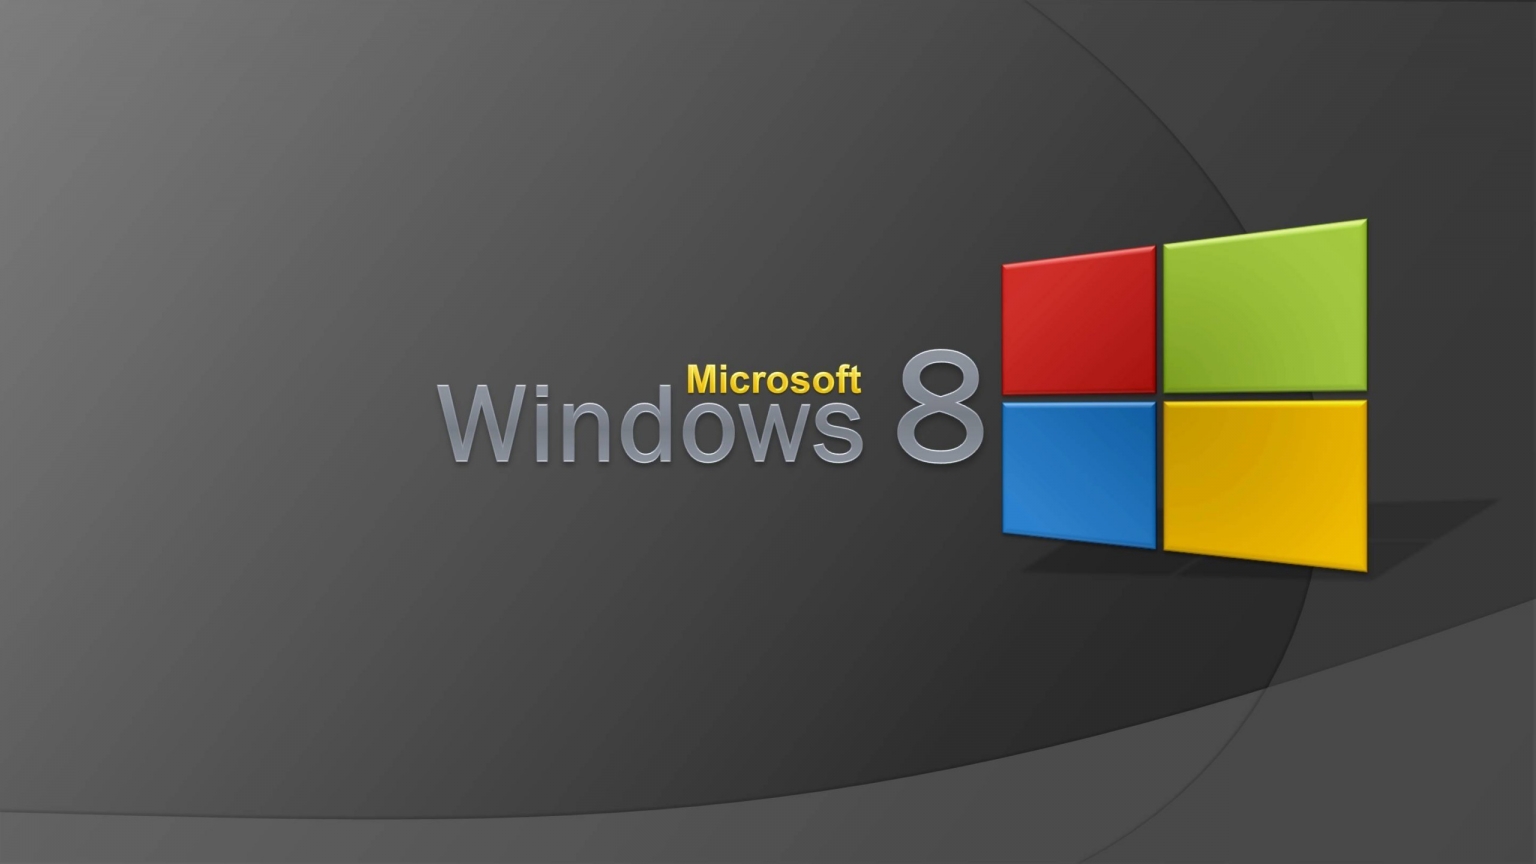 Microsoft Windows 8 for 1536 x 864 HDTV resolution